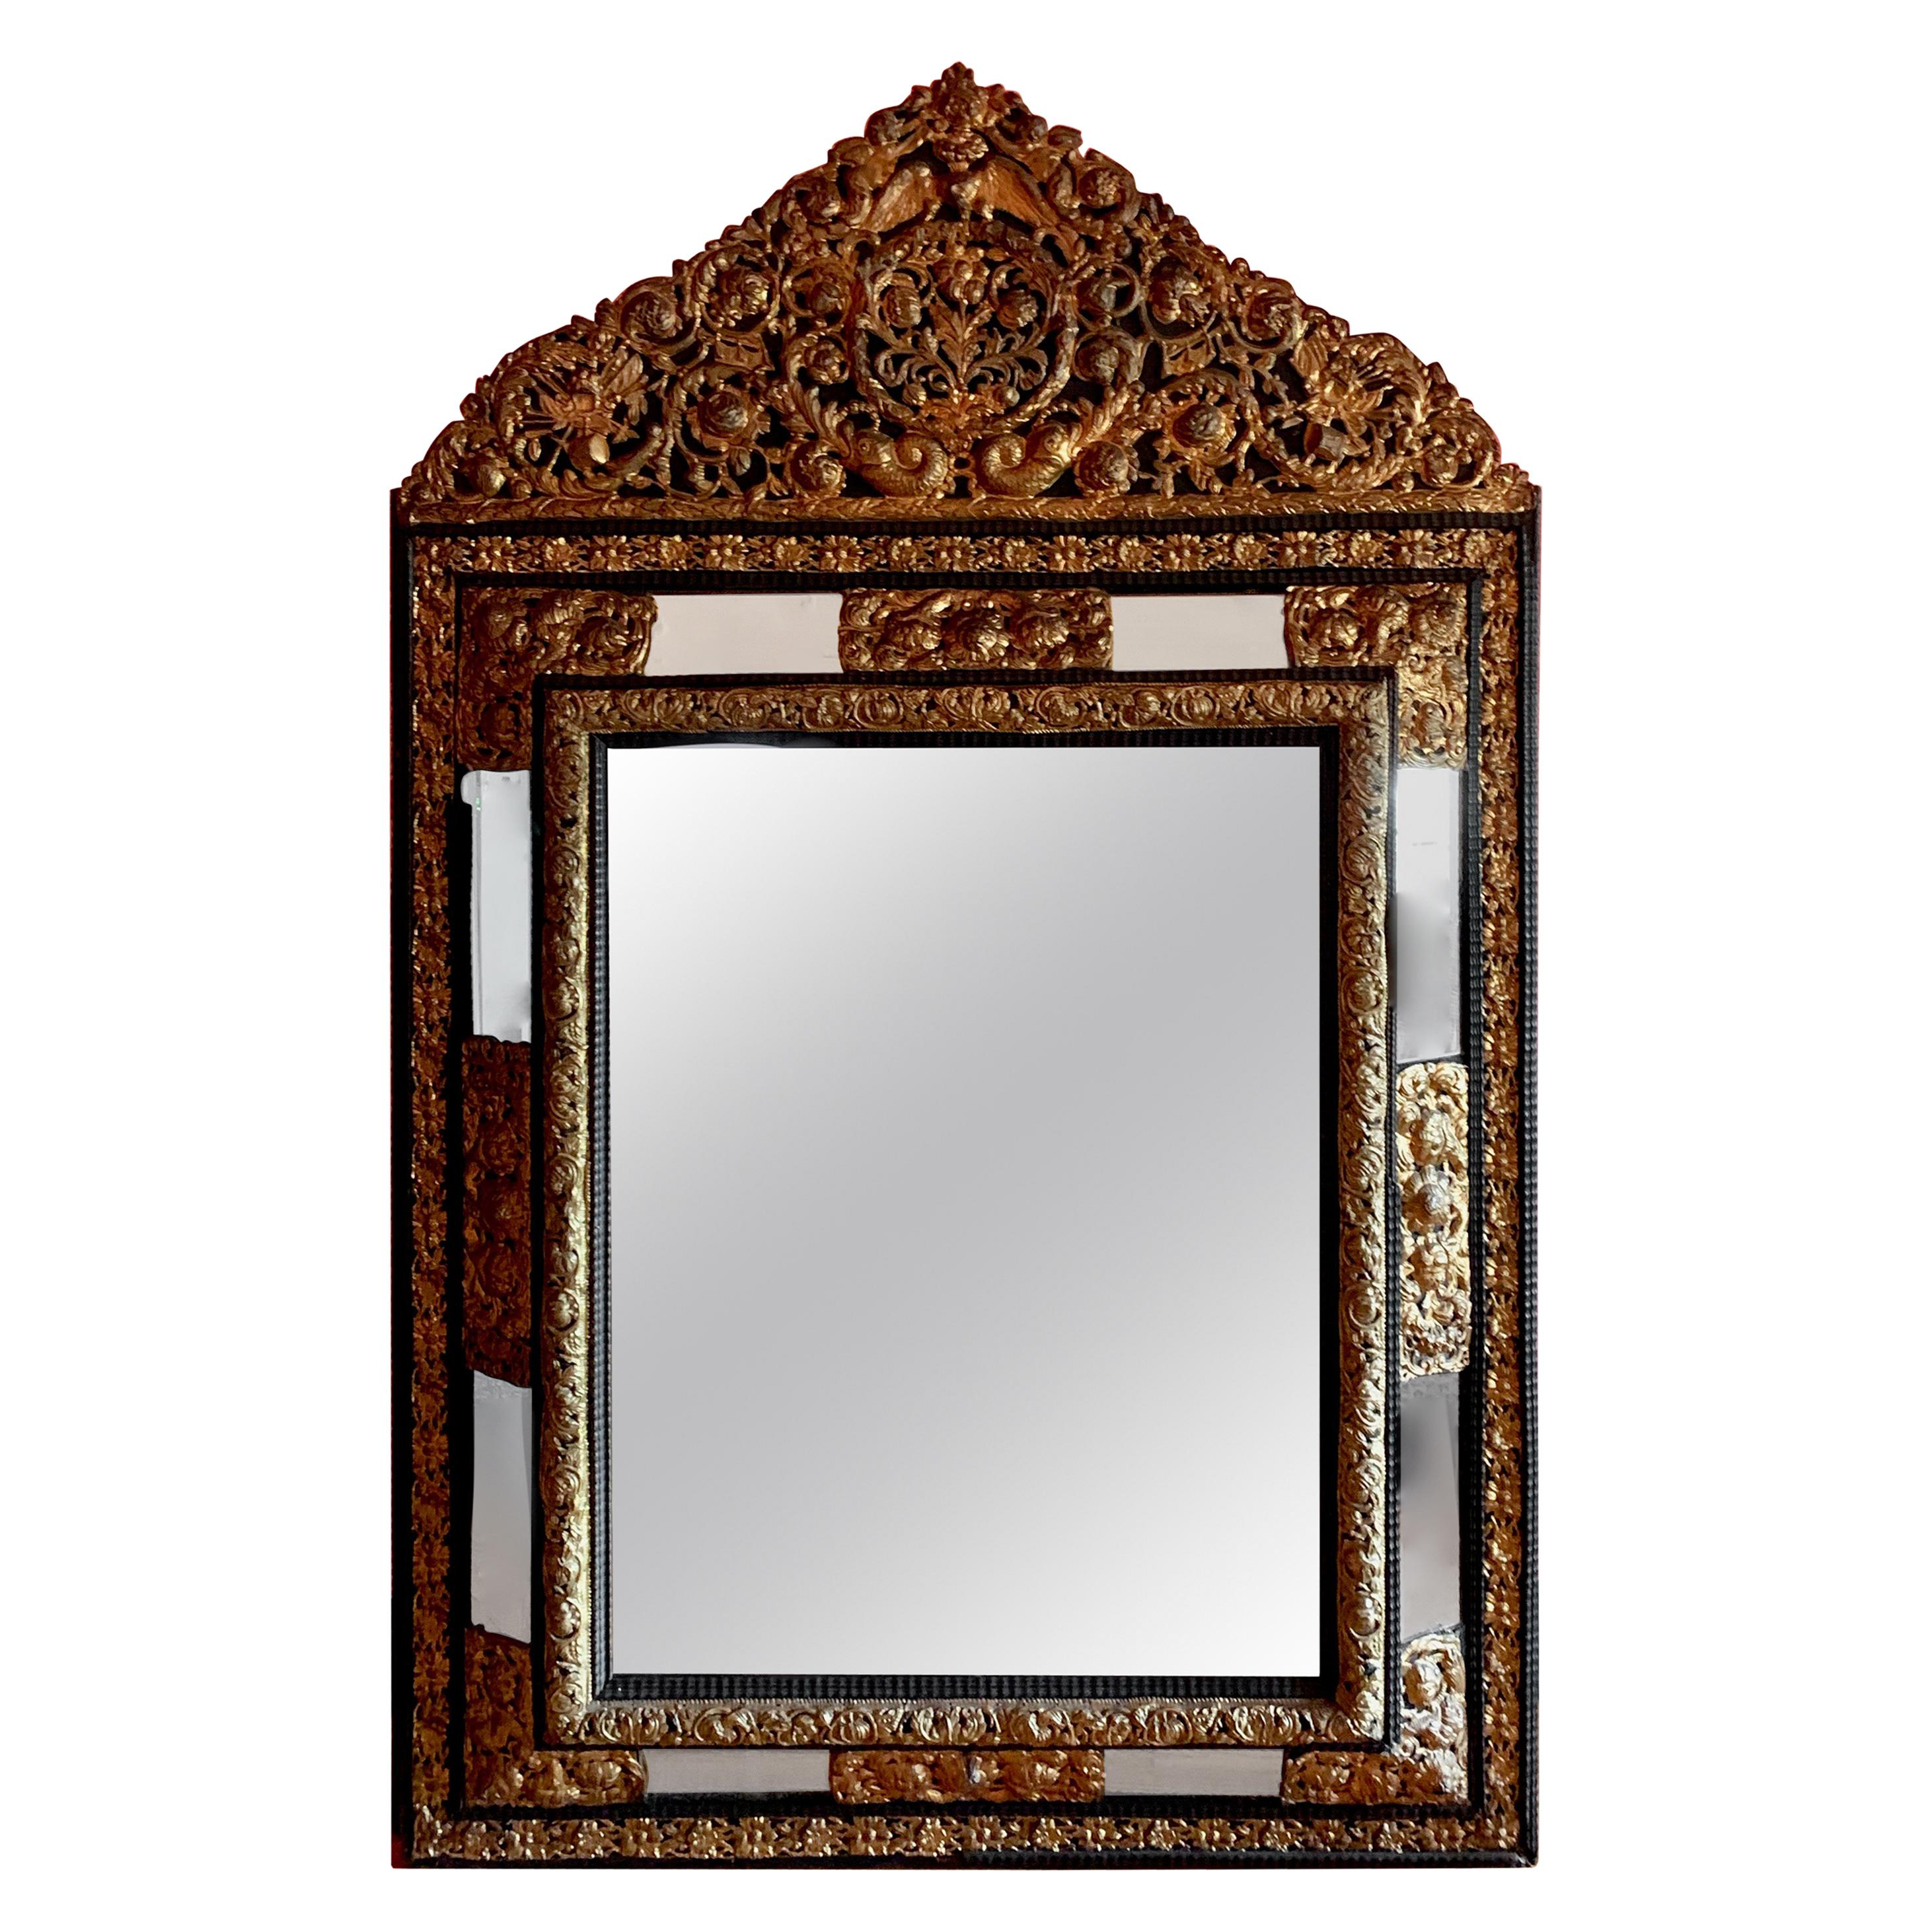 Spiegel aus Repousse-Messing mit abgeschrägtem Glas aus Ebenholz